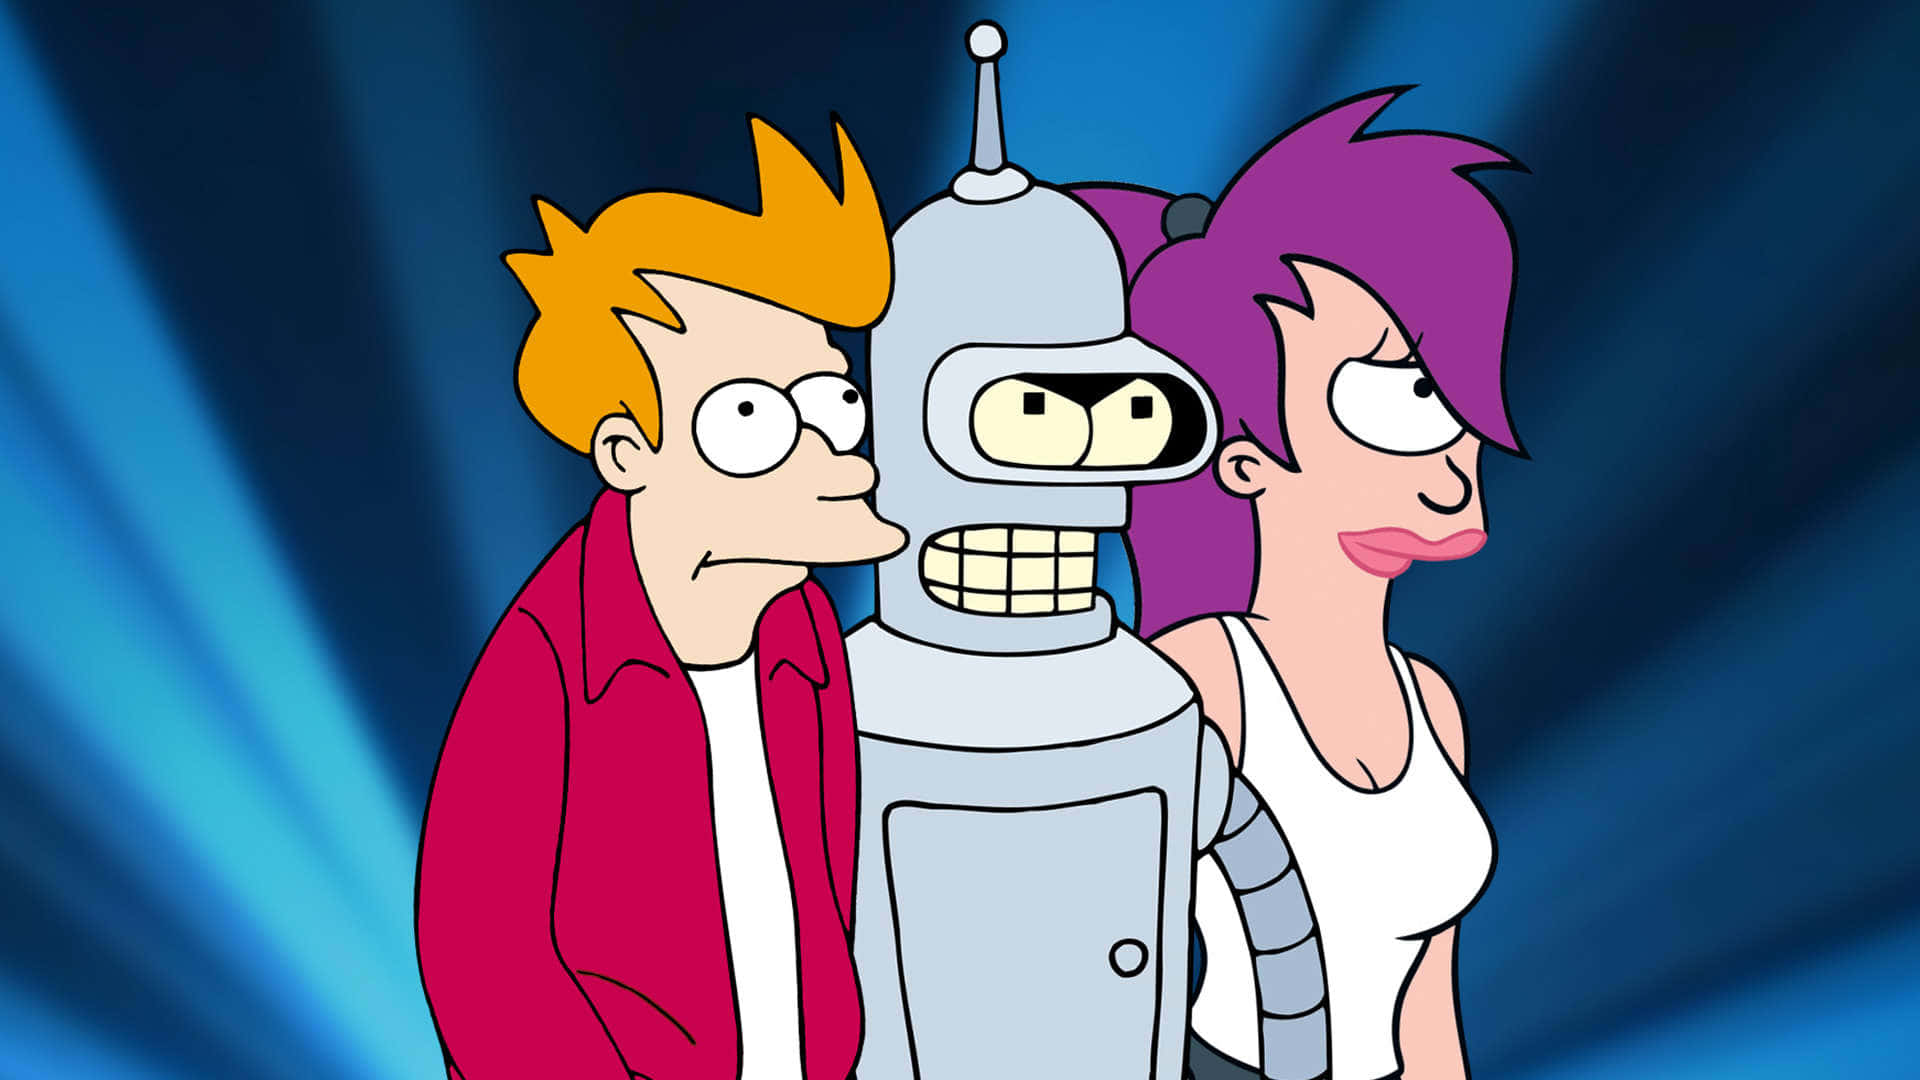 Professor Farnsworth transporter Fry og Bender over rummet i Futurama.